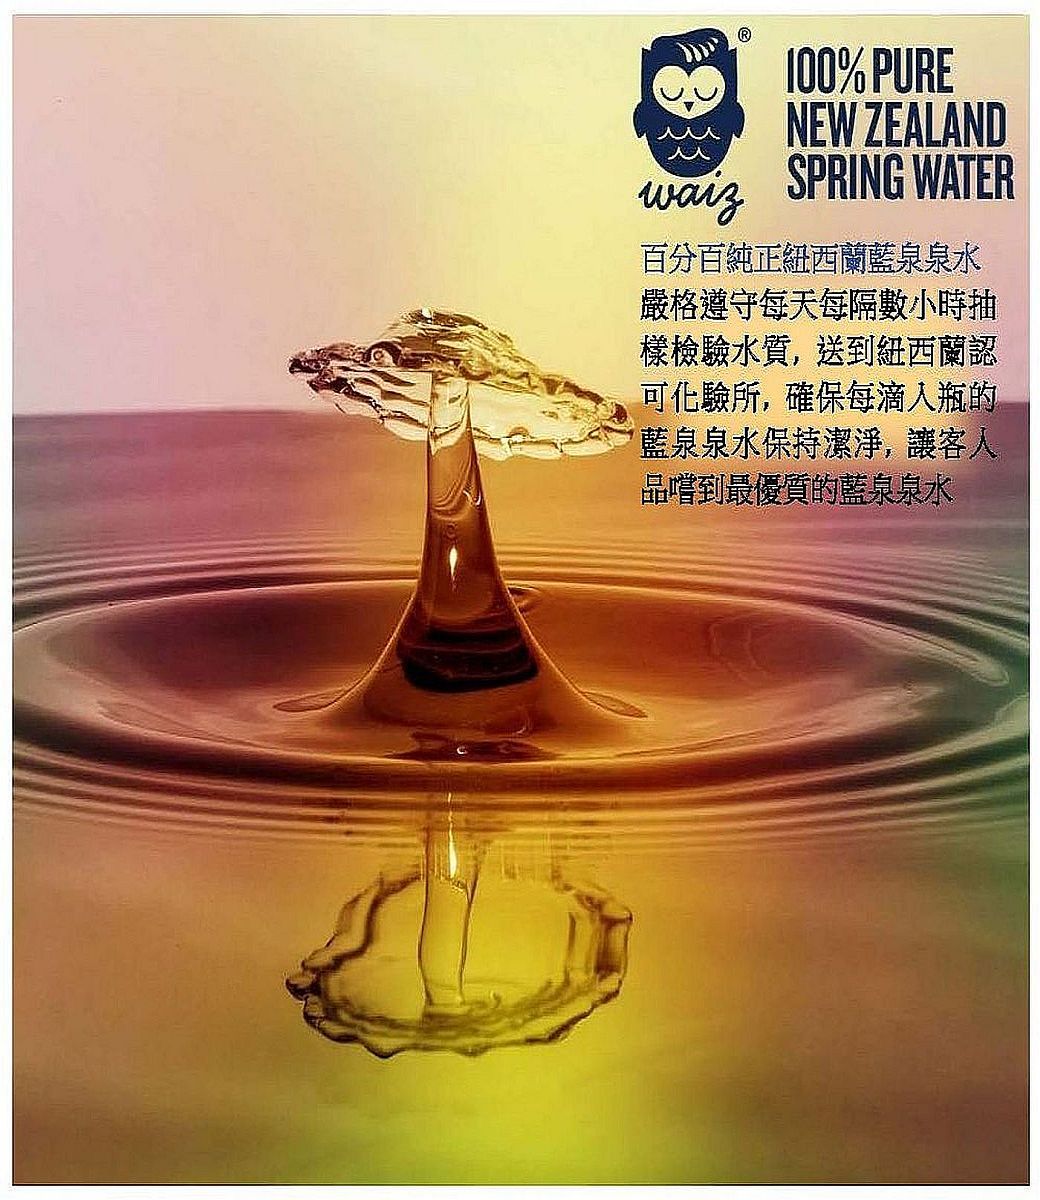 100% PURENEW ZEALAND SPRING WATER百分百純正紐西蘭泉泉水嚴格遵守每天每隔數小時抽樣檢驗水質,送到紐西蘭認可化驗所,確保每滴入瓶的藍泉泉水保持潔淨,讓客人品嚐到最優質的藍泉泉水